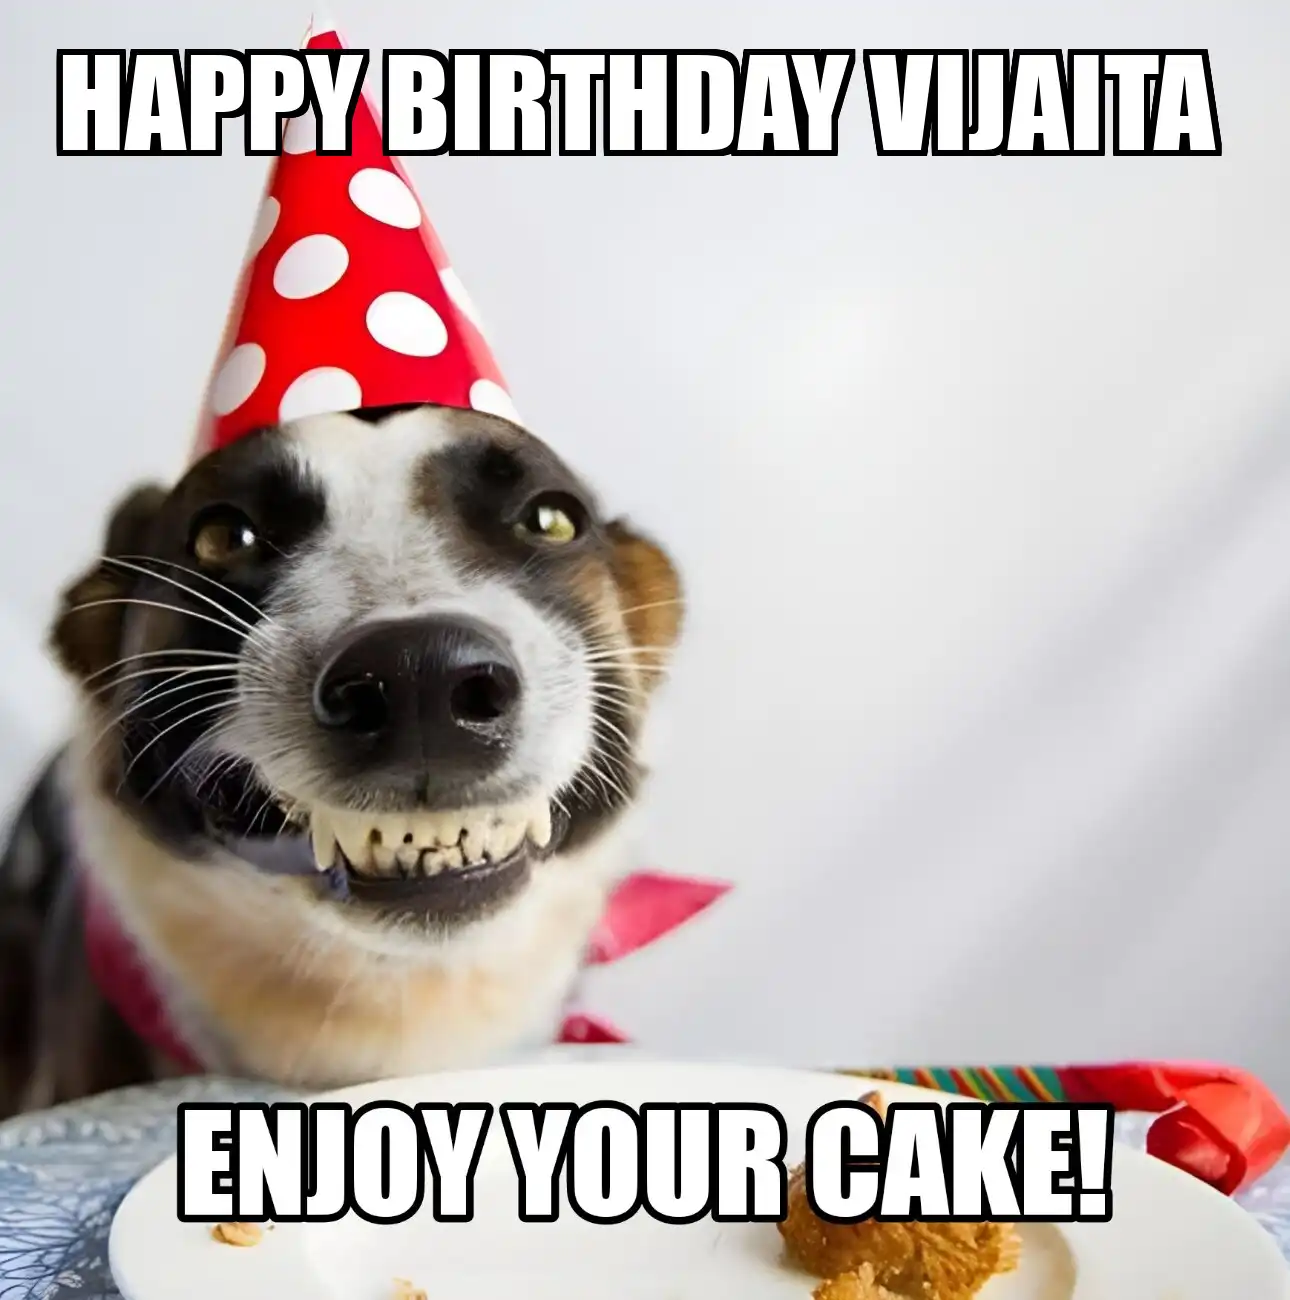 Happy Birthday Vijaita Enjoy Your Cake Dog Meme